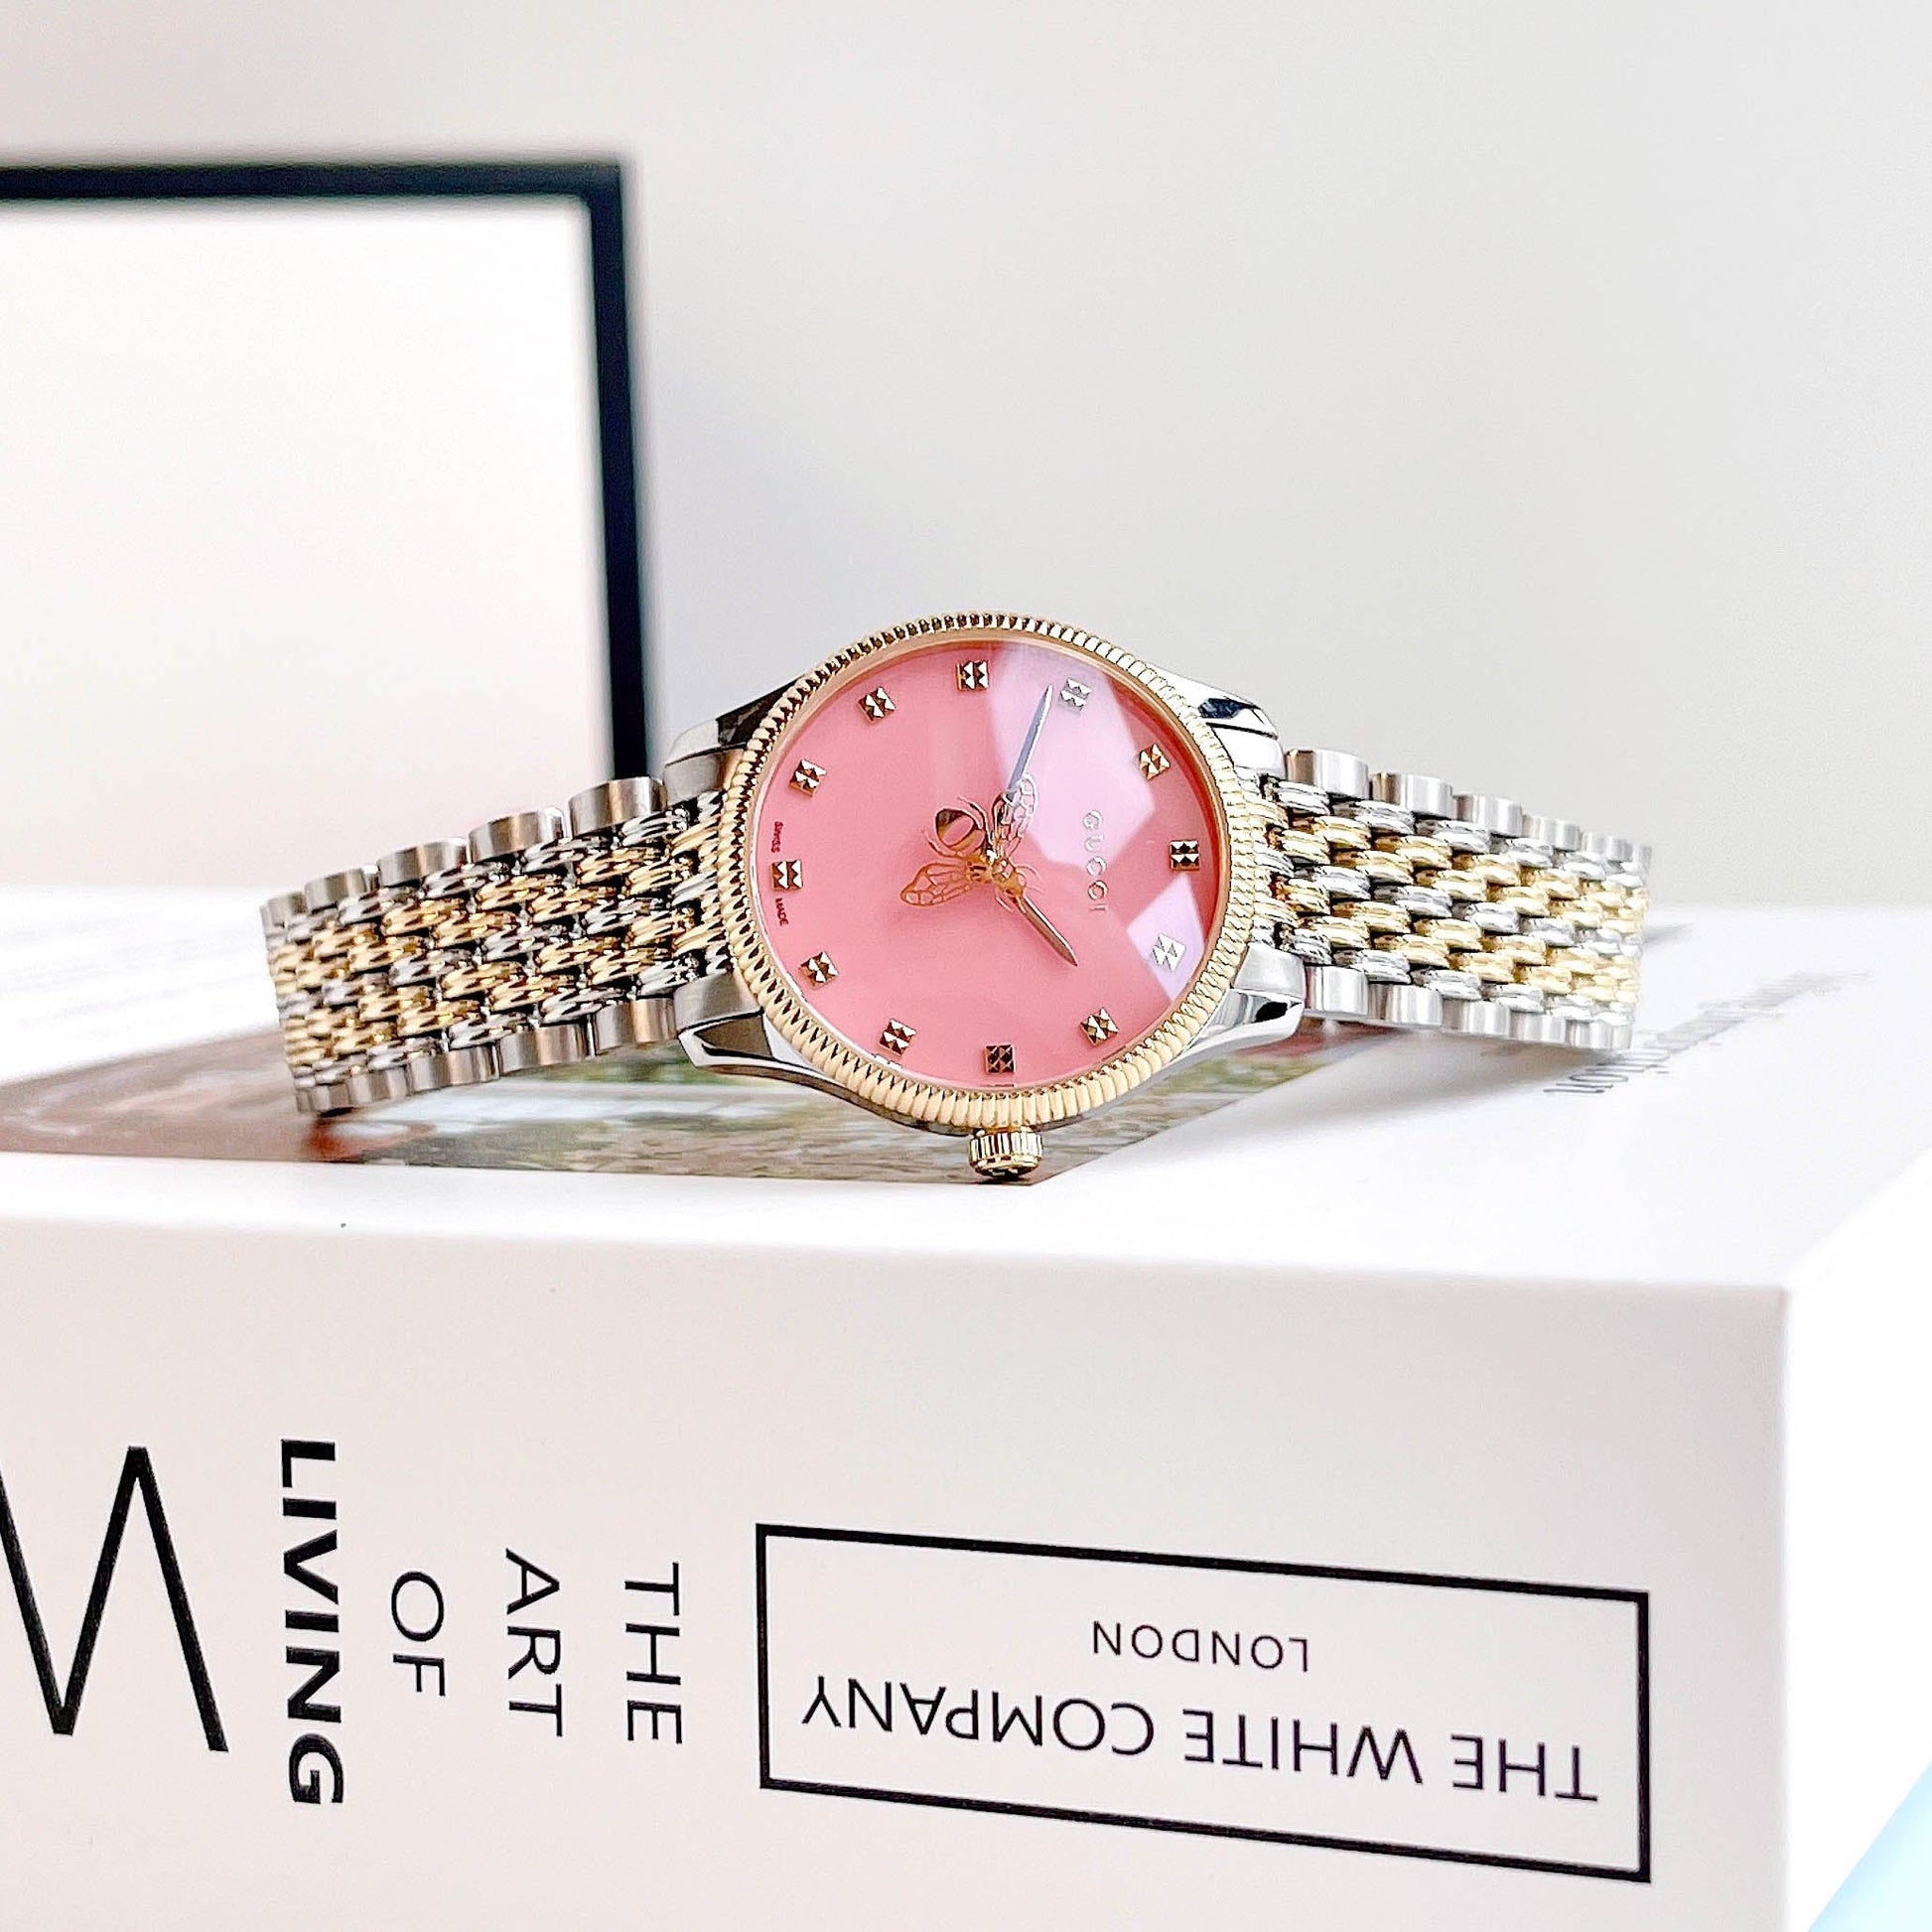 Gucci G Timeless Quartz Pink Dial Two Tone Steel Strap Watch For Women - YA1265030